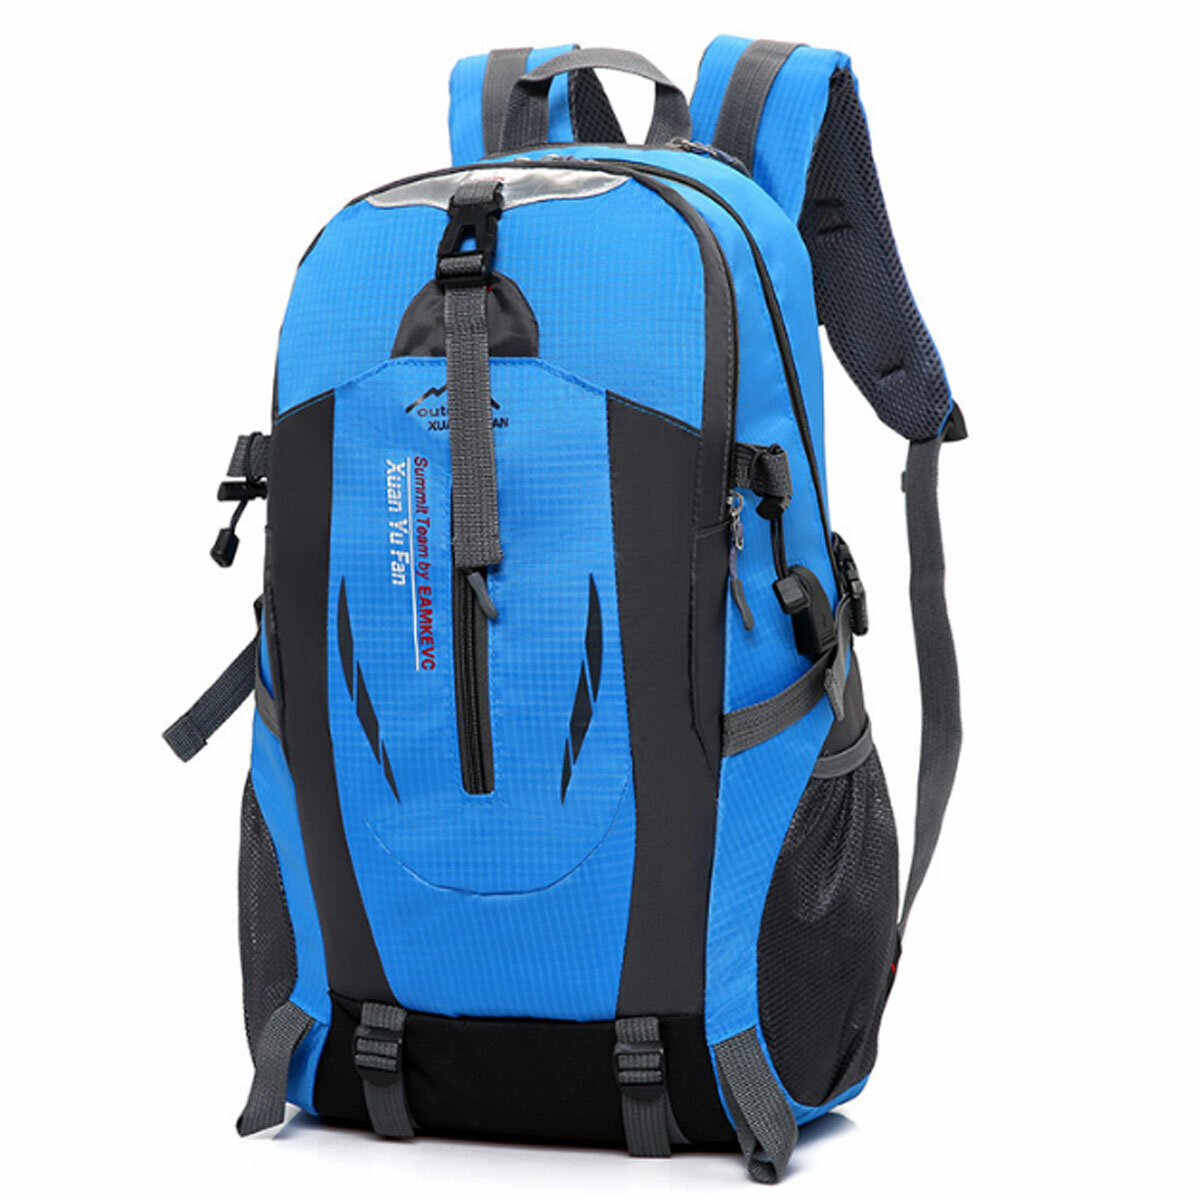 USBポート付きのエクストララージナイロンバックパック、旅行、ハイキング、キャンプ、防水のオートバイ用バッグ。